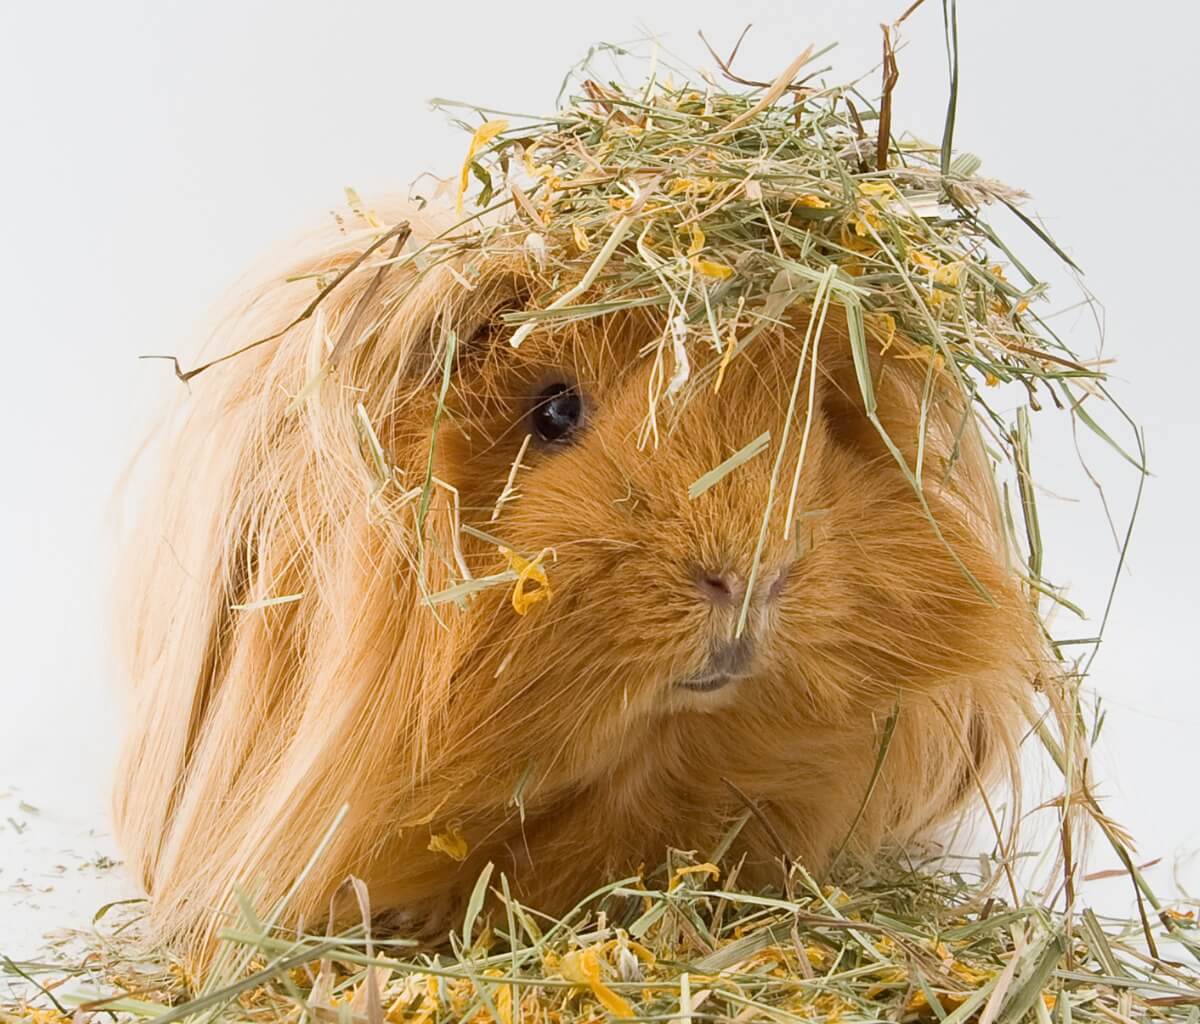 A sheltie guinea pig on hay.